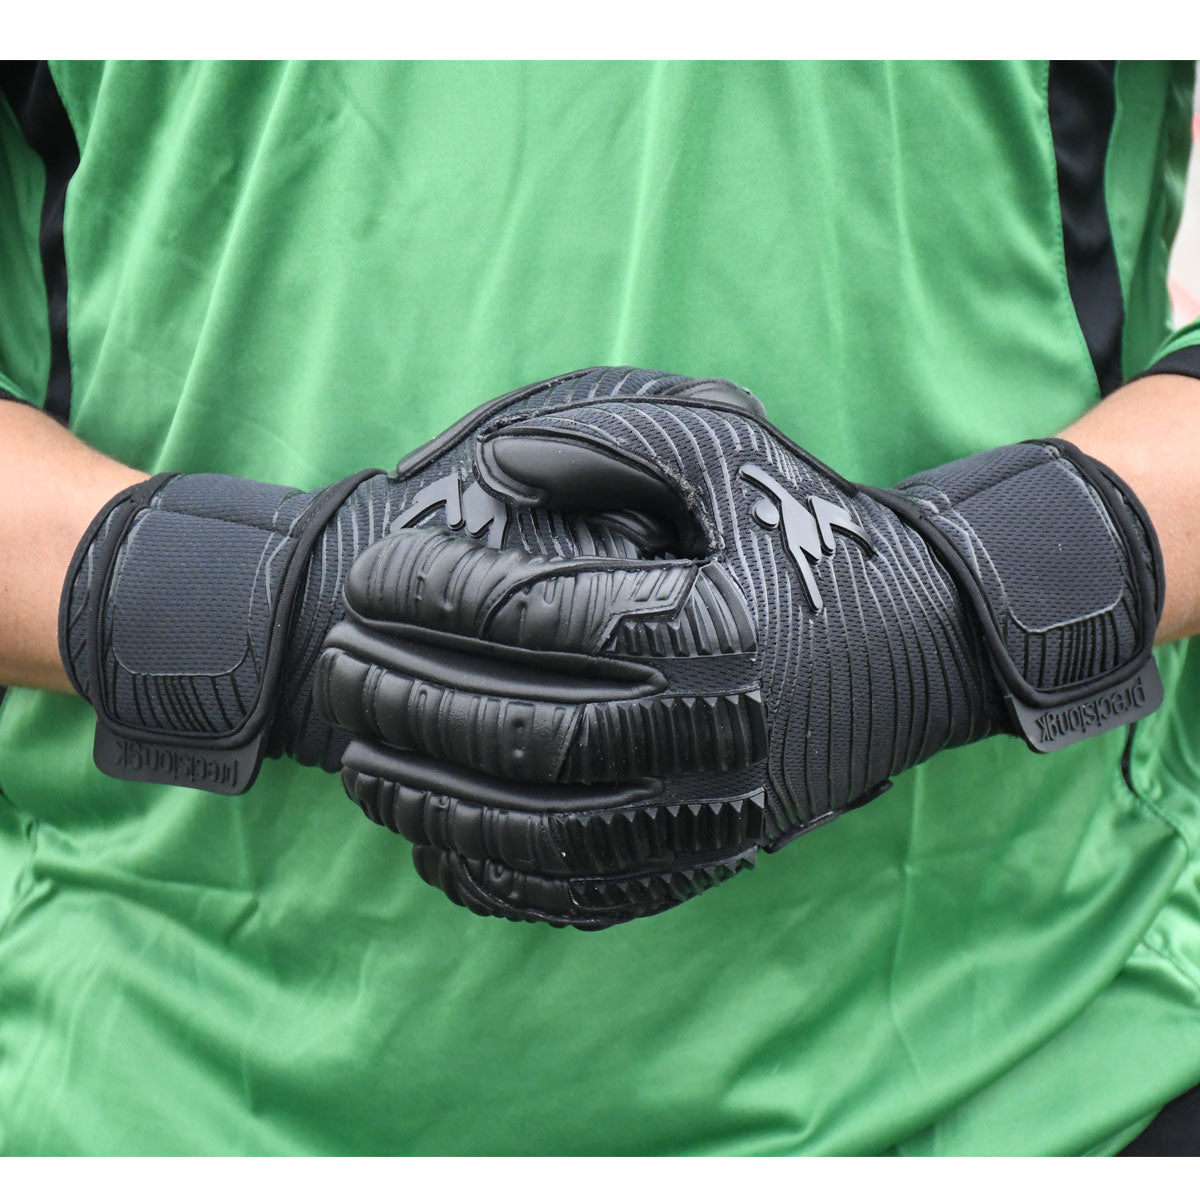 Precision Training Elite 2.0 Blackout Goal Keeper Gloves - Adult